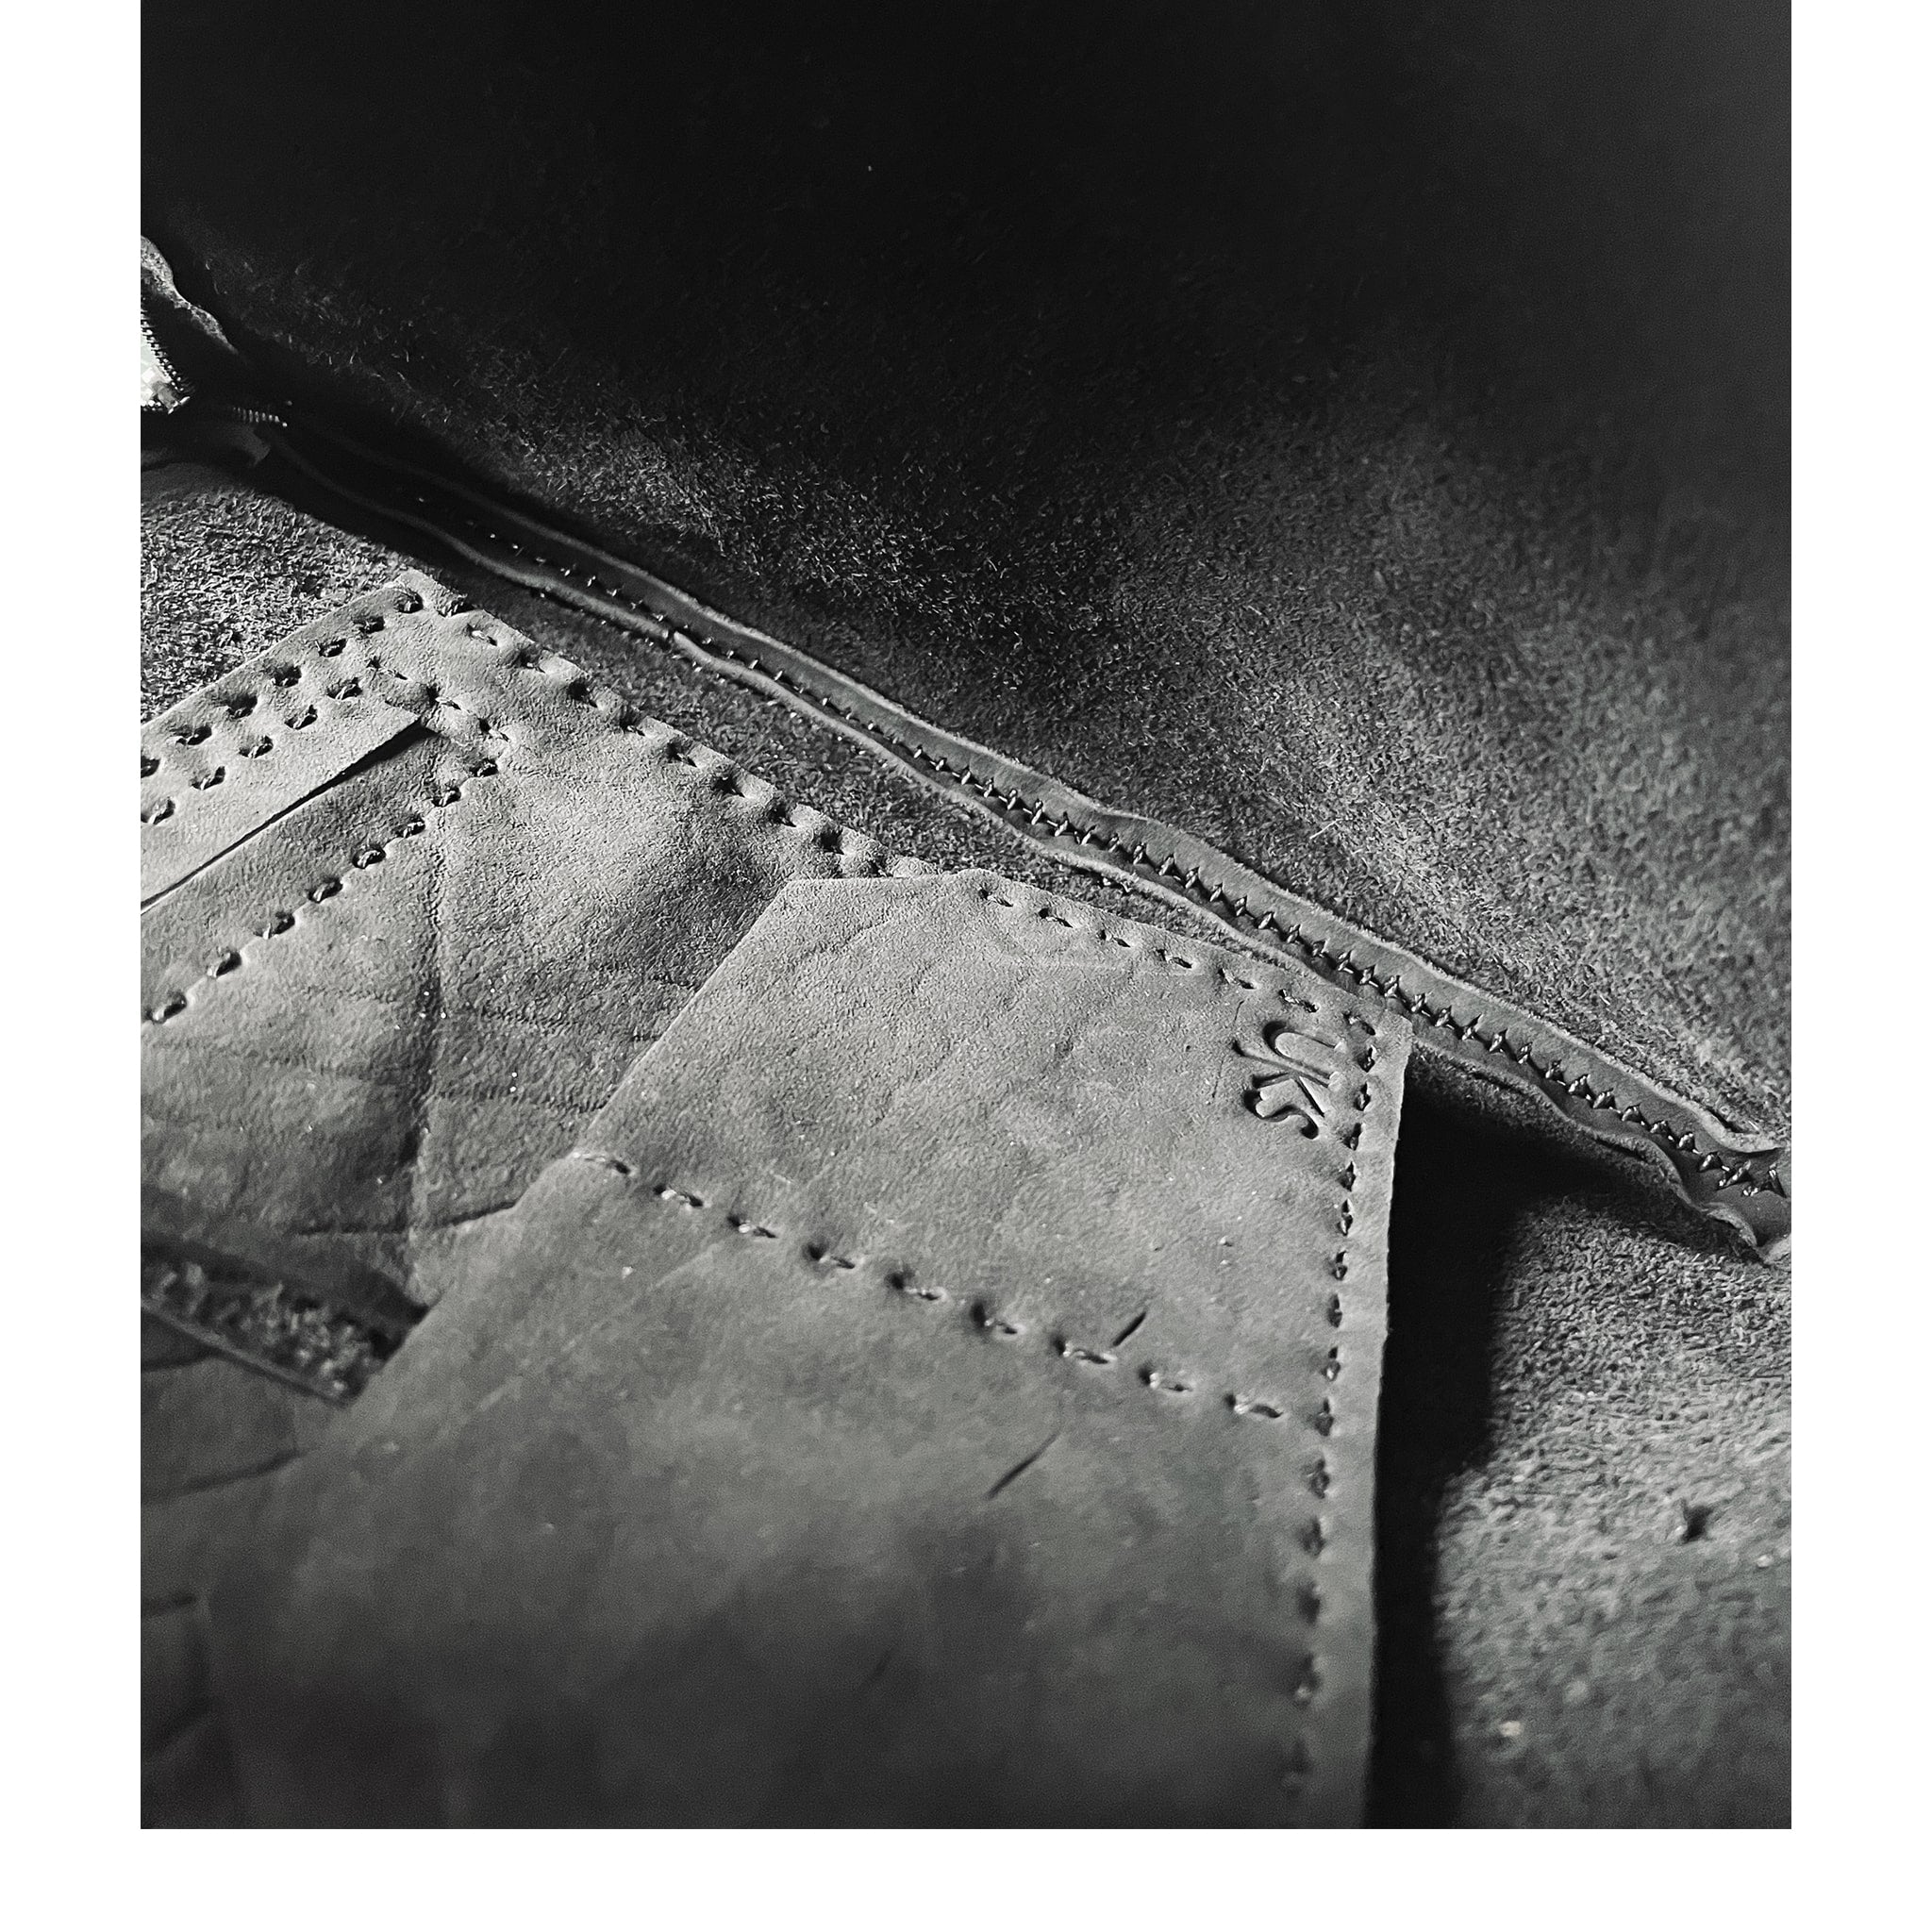 hand sewn avant garde black leather shoulder bag from atelier skn.